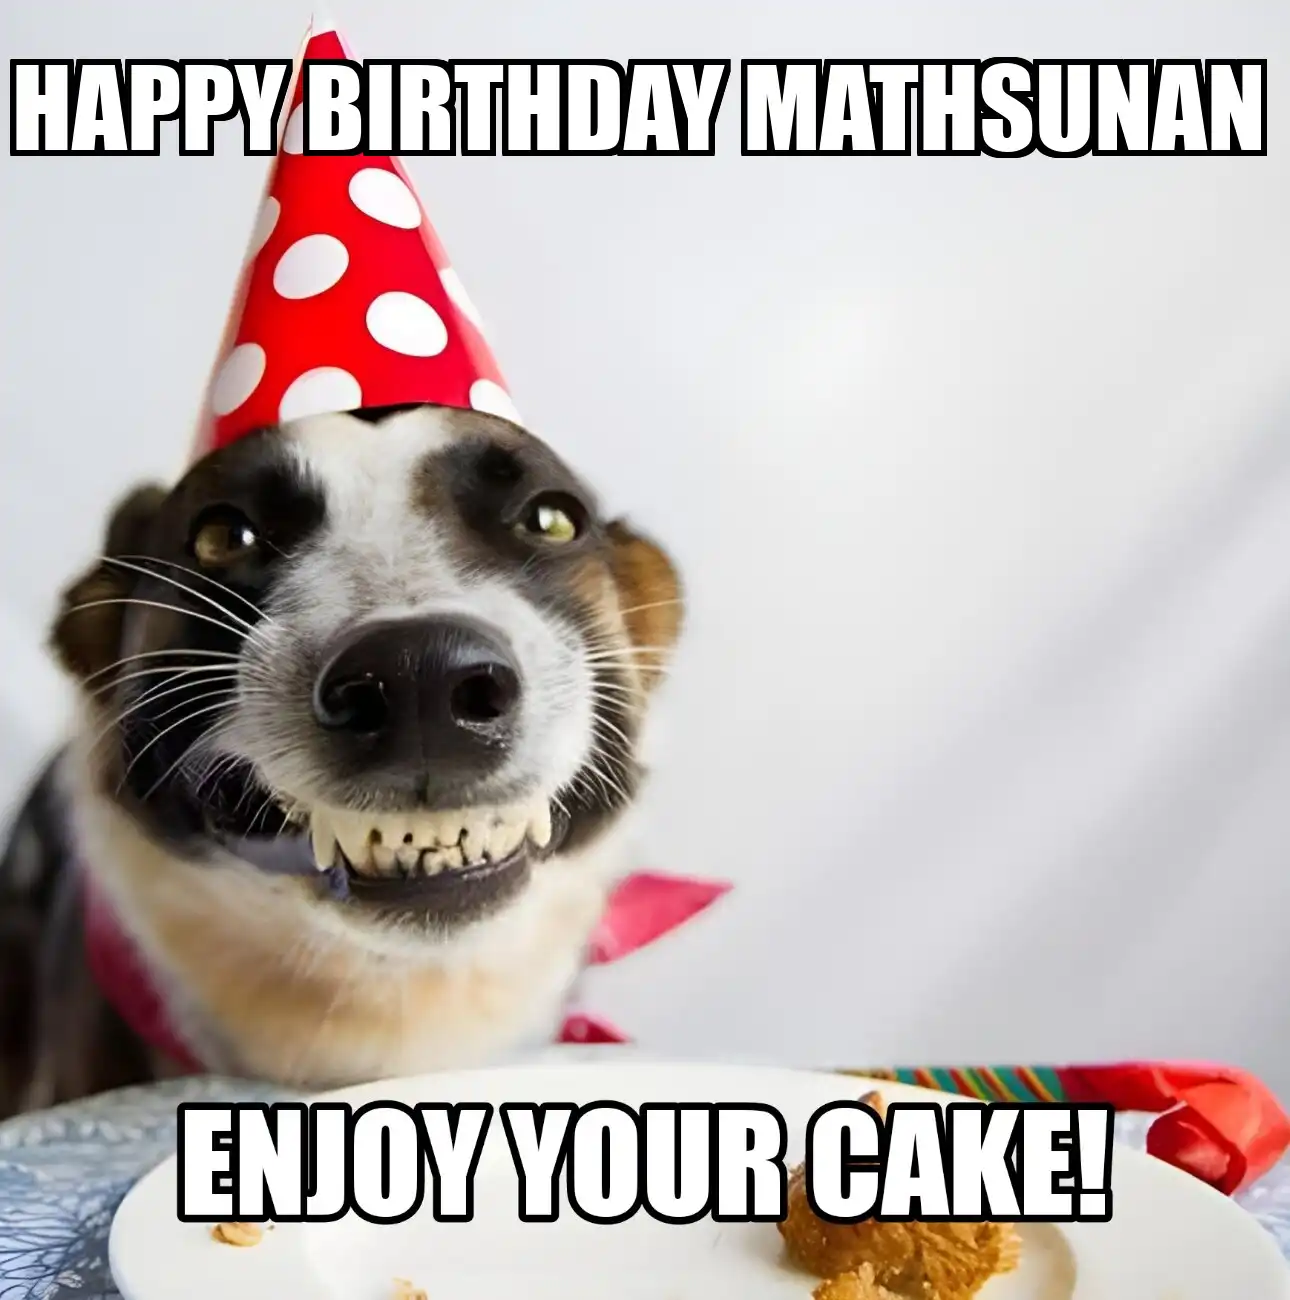 Happy Birthday Mathsunan Enjoy Your Cake Dog Meme